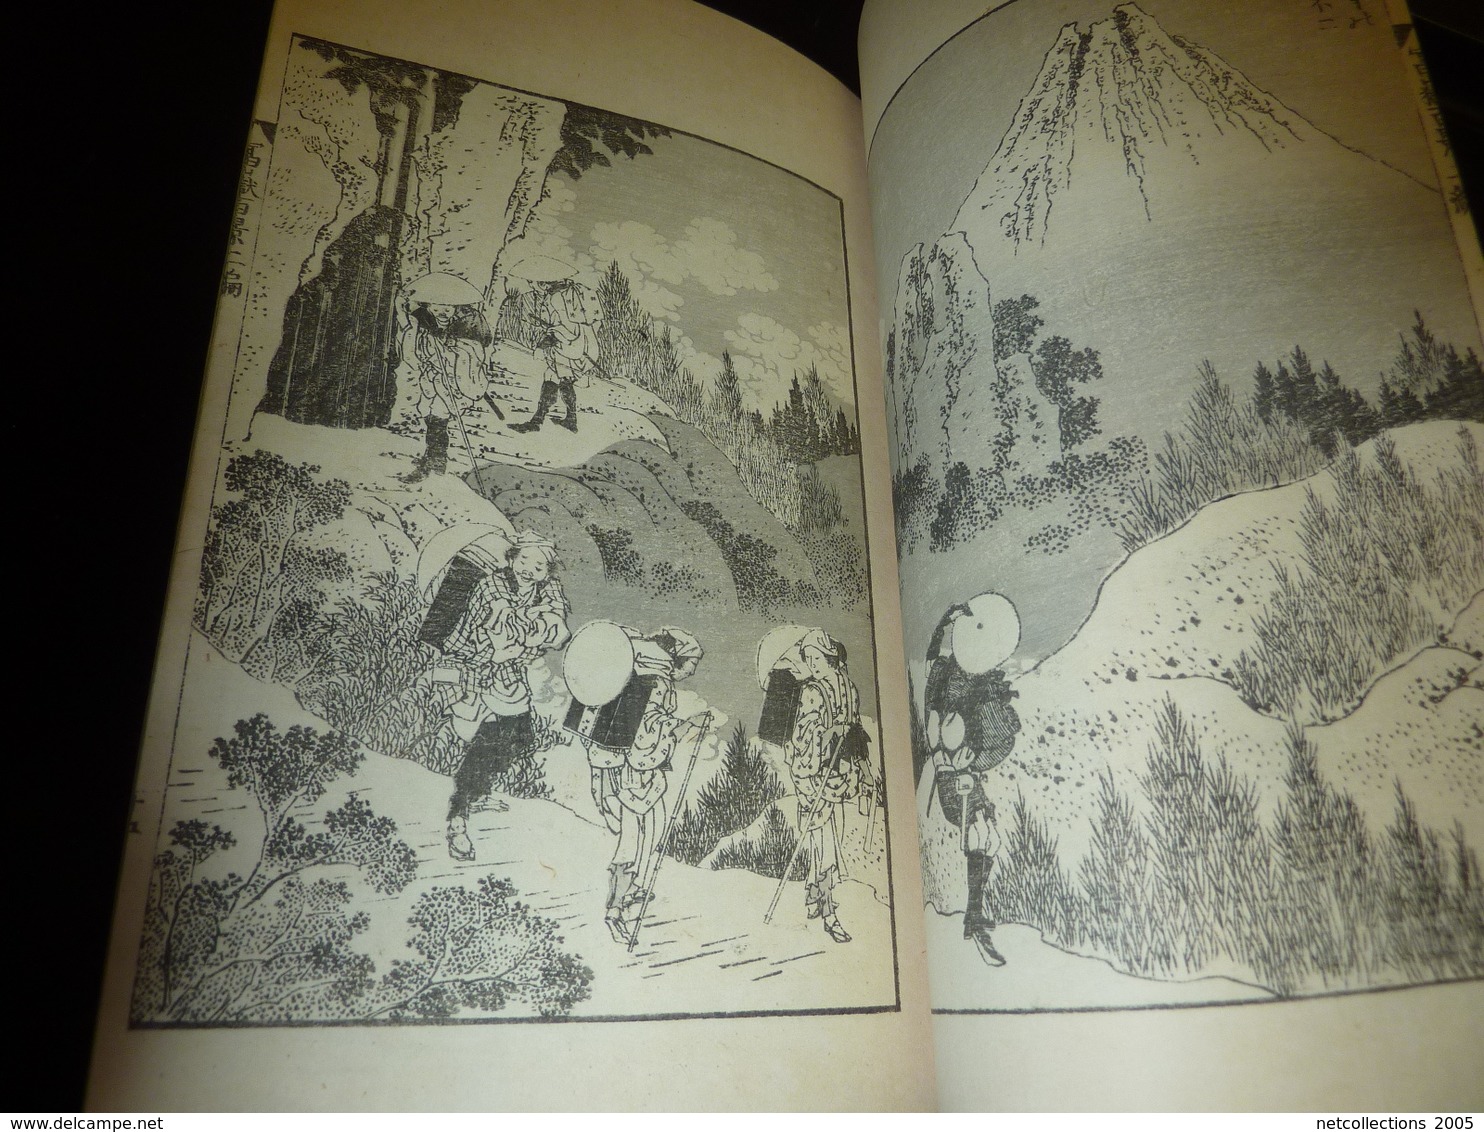 LIVRE ANCIEN JAPONAIS ESTAMPES LITHOGRAPHIES GRAVURES 03 - JAPANESE OLD BOOK ILLUSTRATION